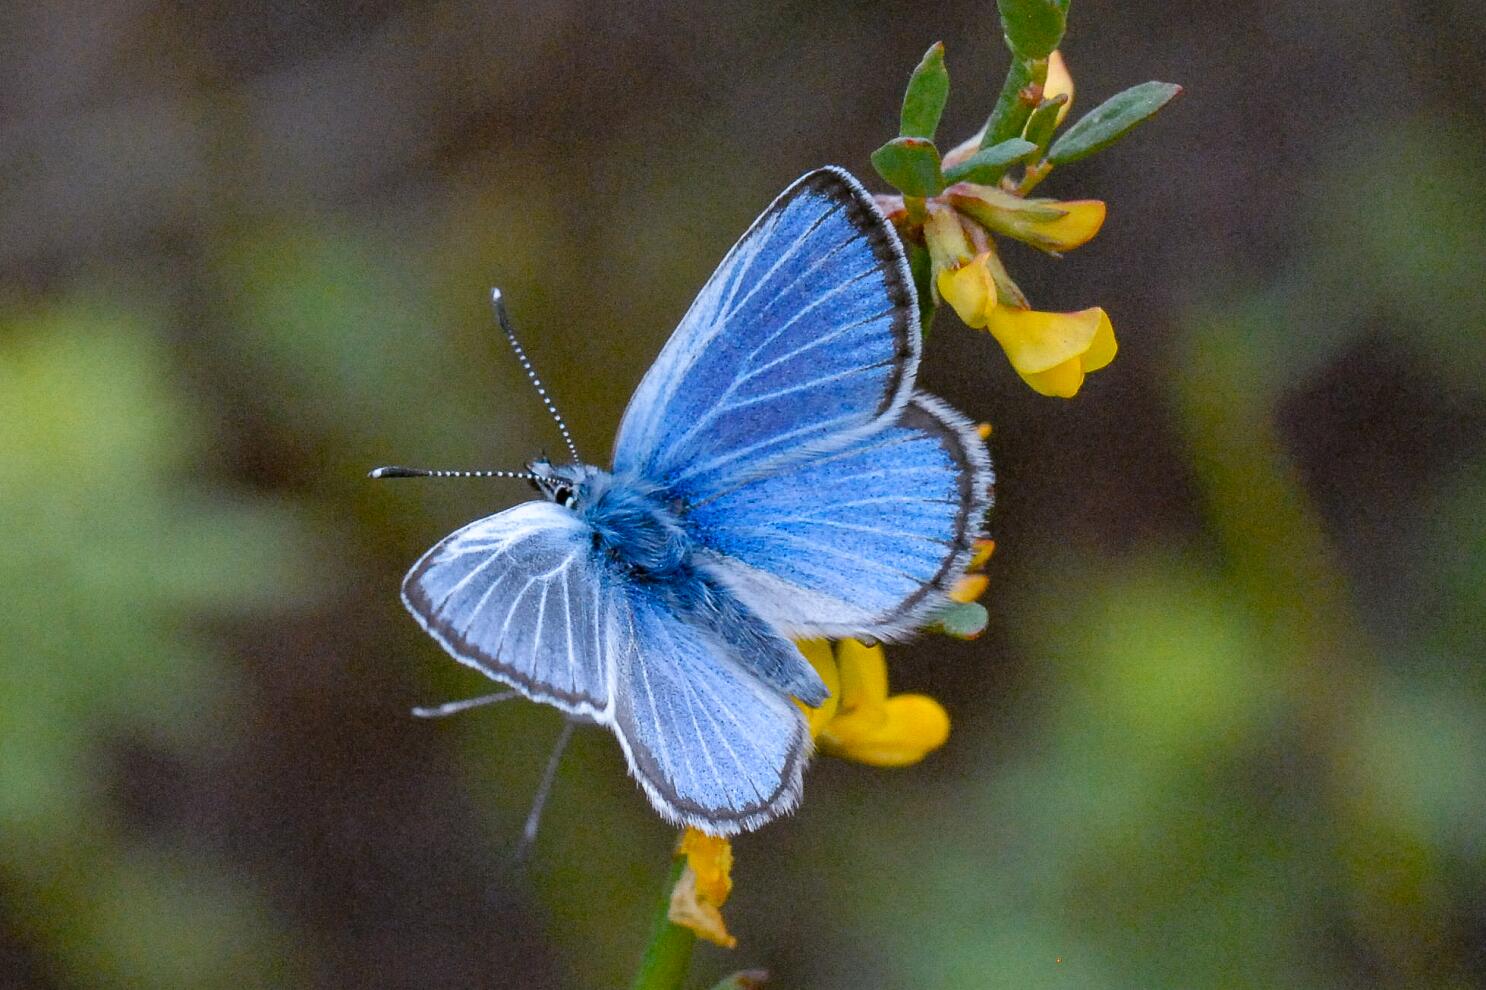 How to see blue butterflies in Palos Verdes, El Segundo - Los